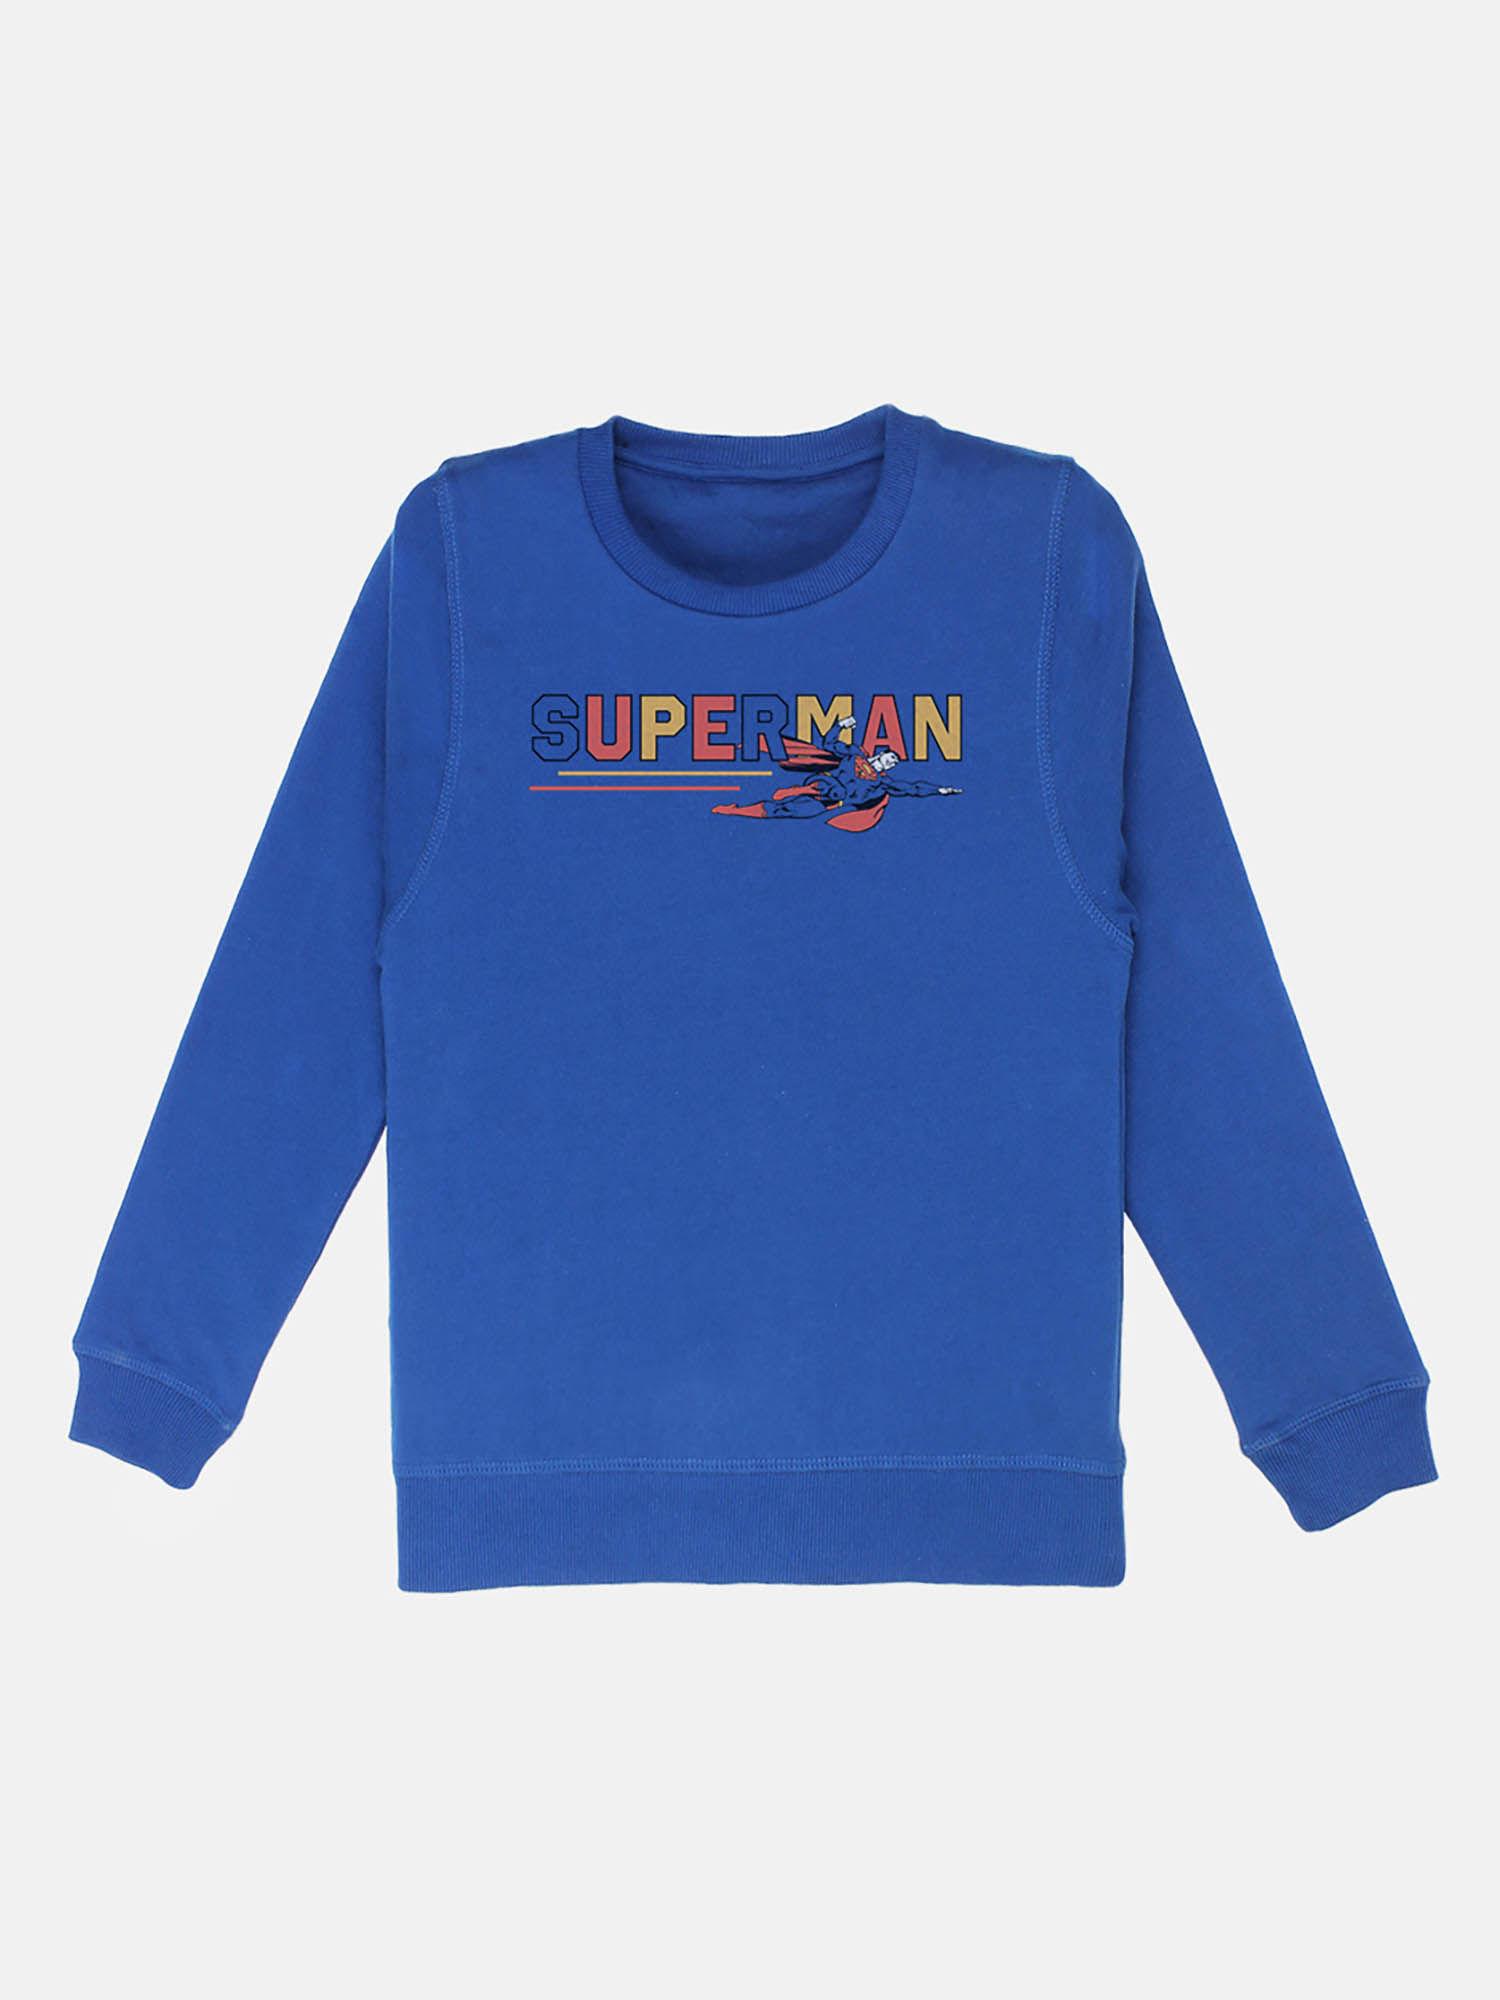 superman printed blue full sleeve sweater